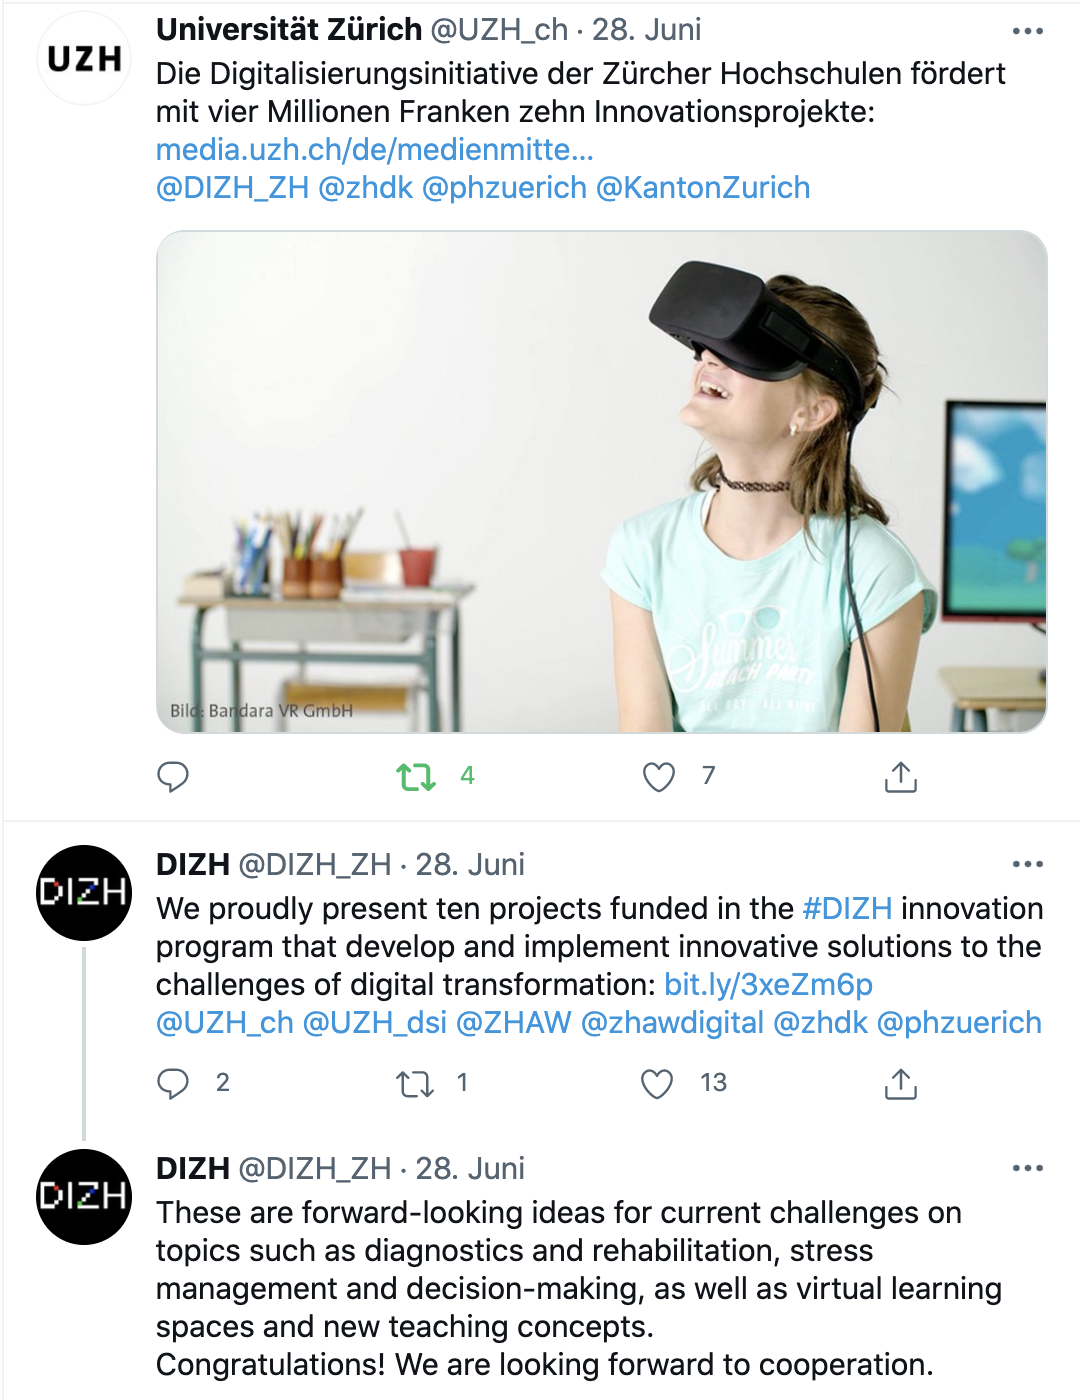 Twitter DIZH supports Digital Planet